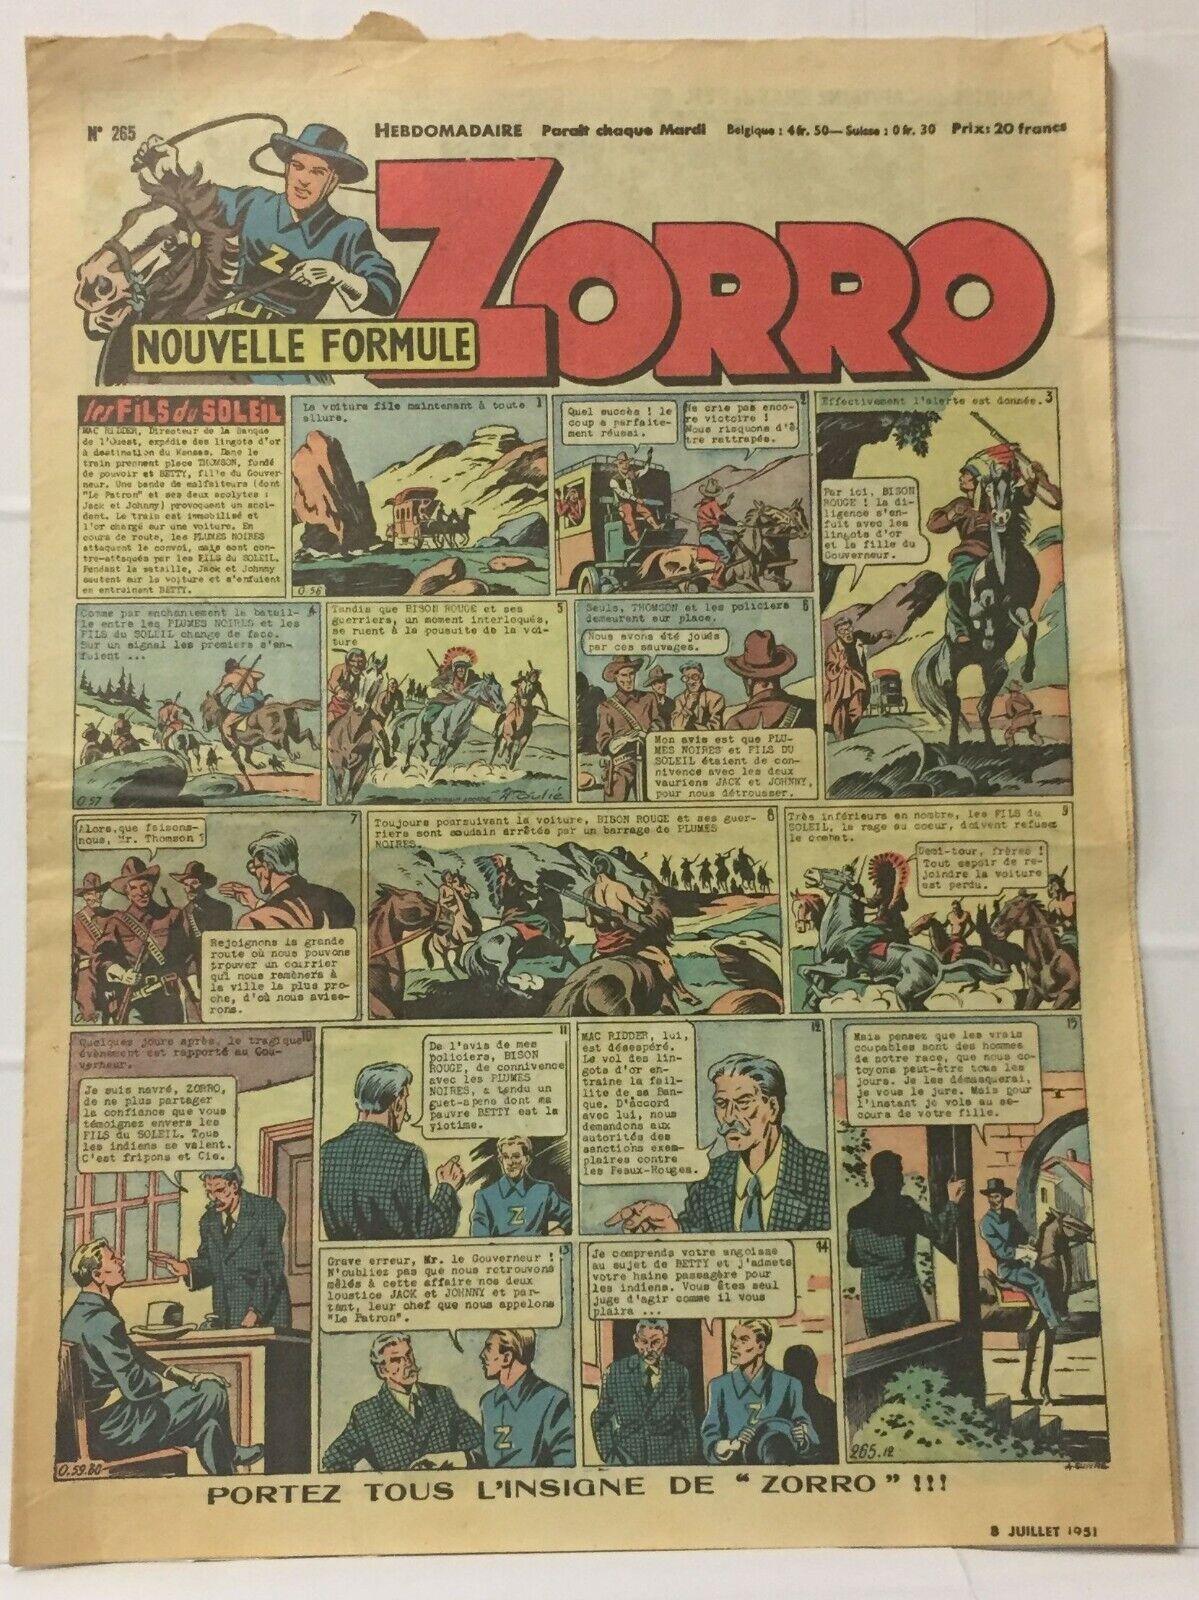 Zorro - 8 July 1951 - No. 265